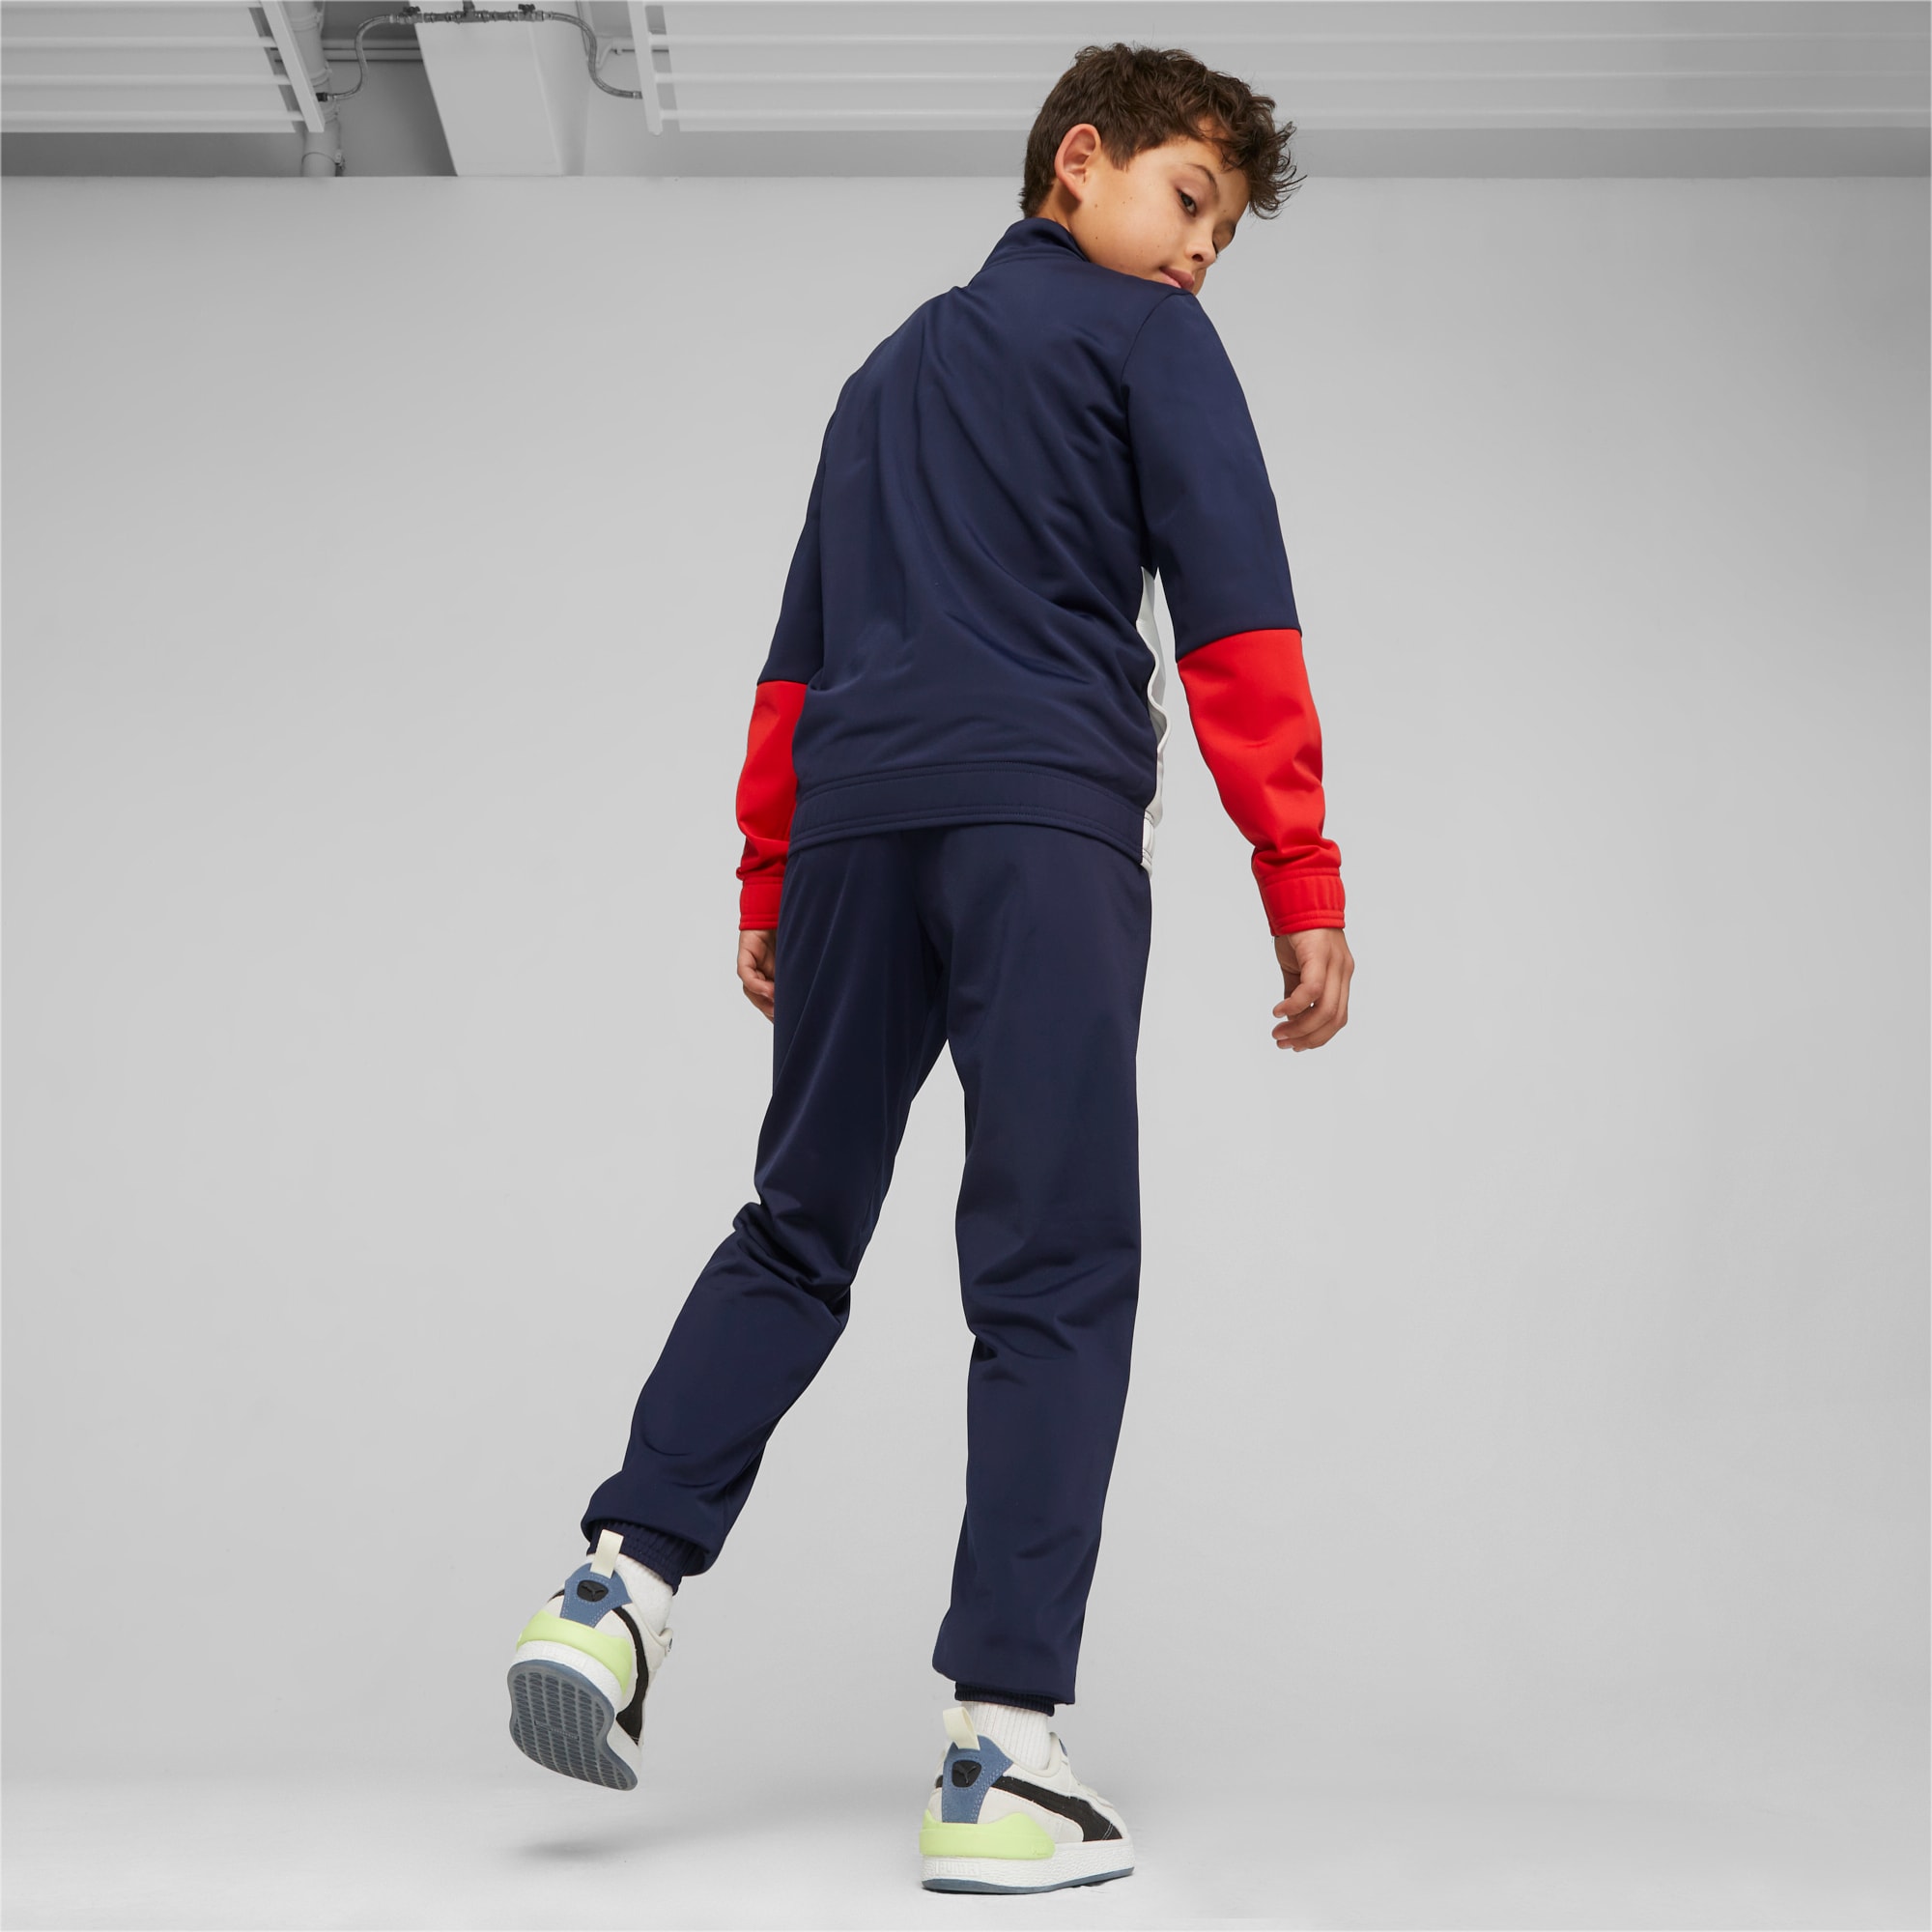 PUMA Colourblock Poly Suit Teenager Für Kinder, Blau, Größe: 128, Kleidung